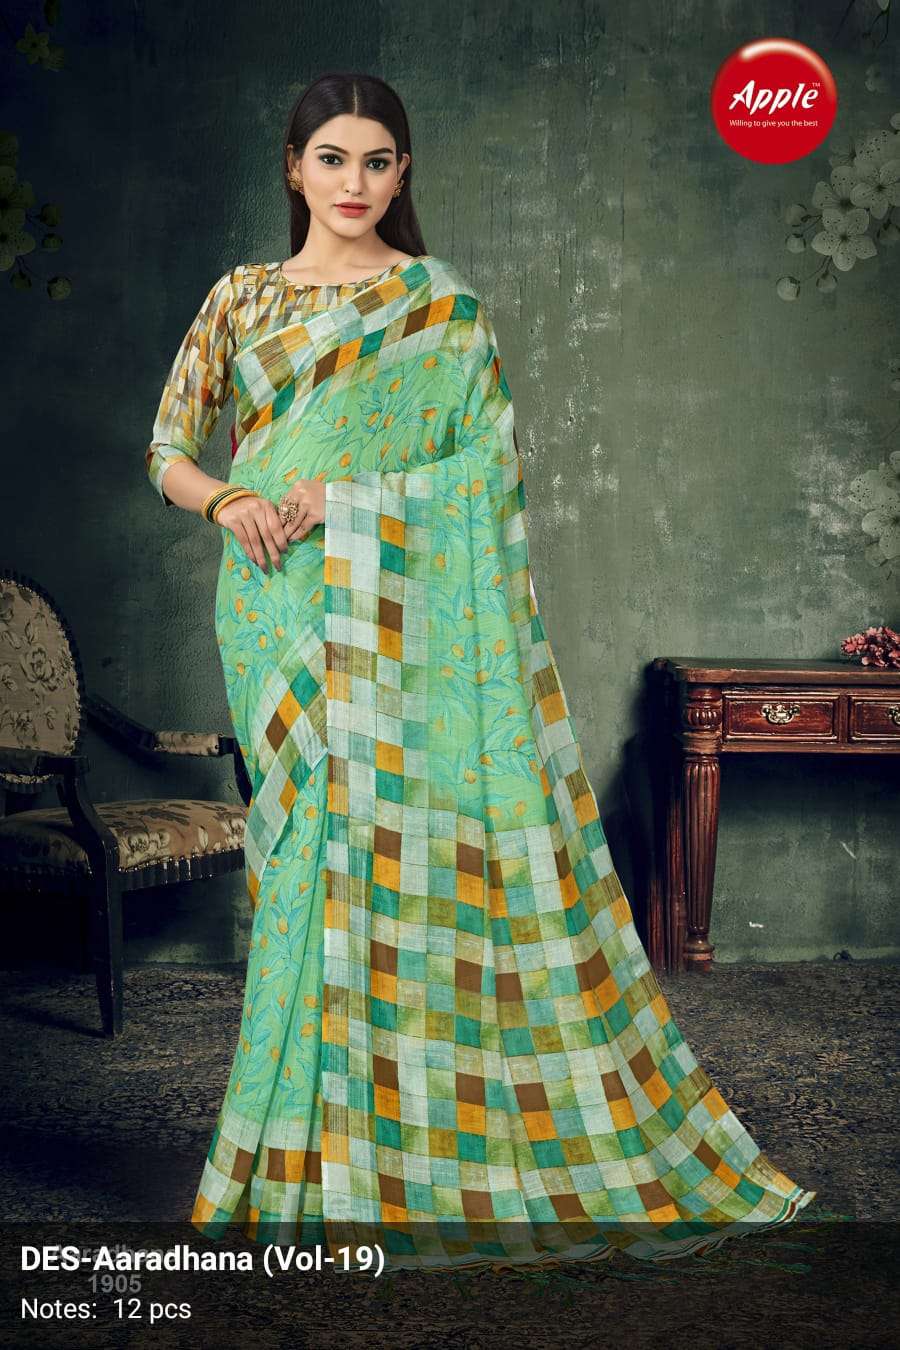 Apple Aaradhana vol 19 Linen with printed fancy look saree c...